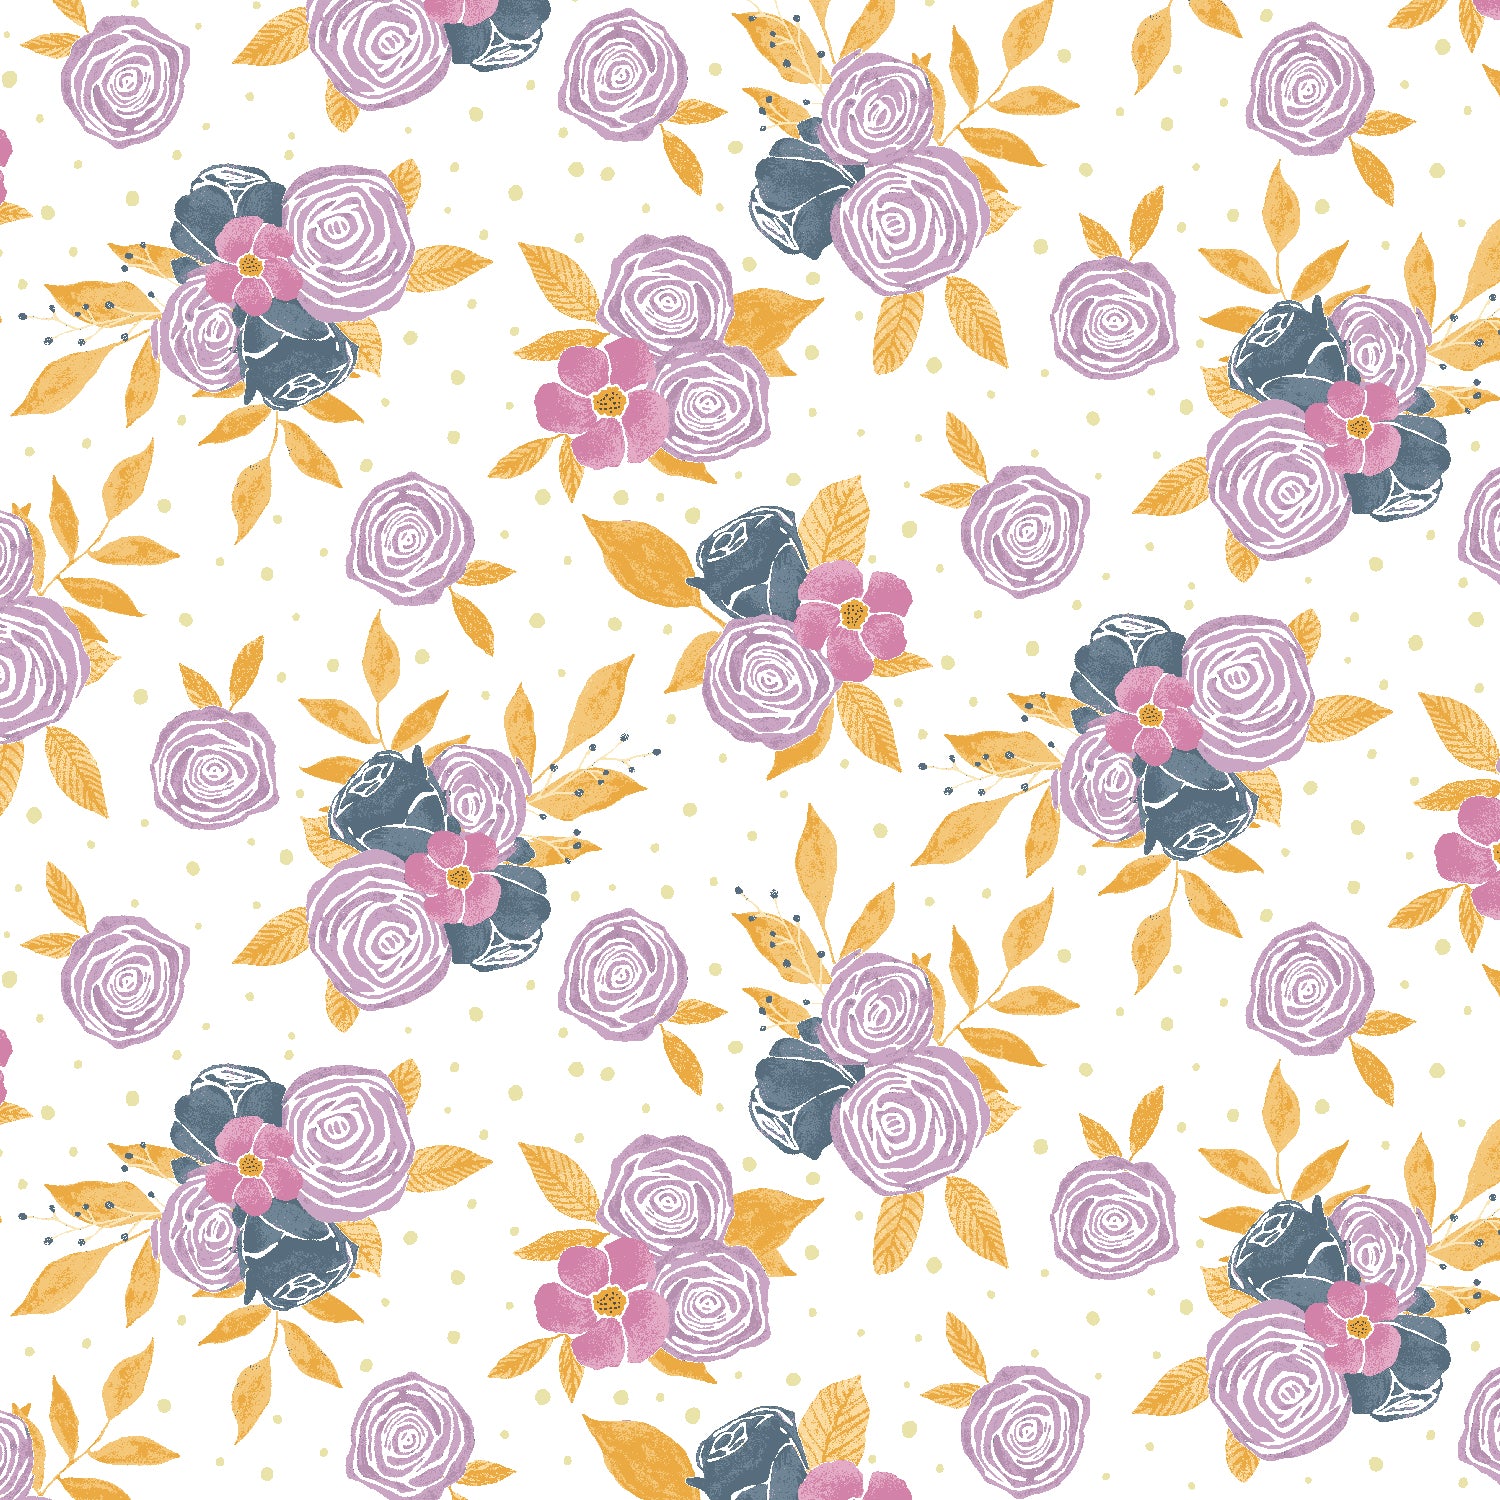 Moonlight Garden Quilt Fabric - Corsage Medium Floral in Roobibos Purple - RJ5501-RO1